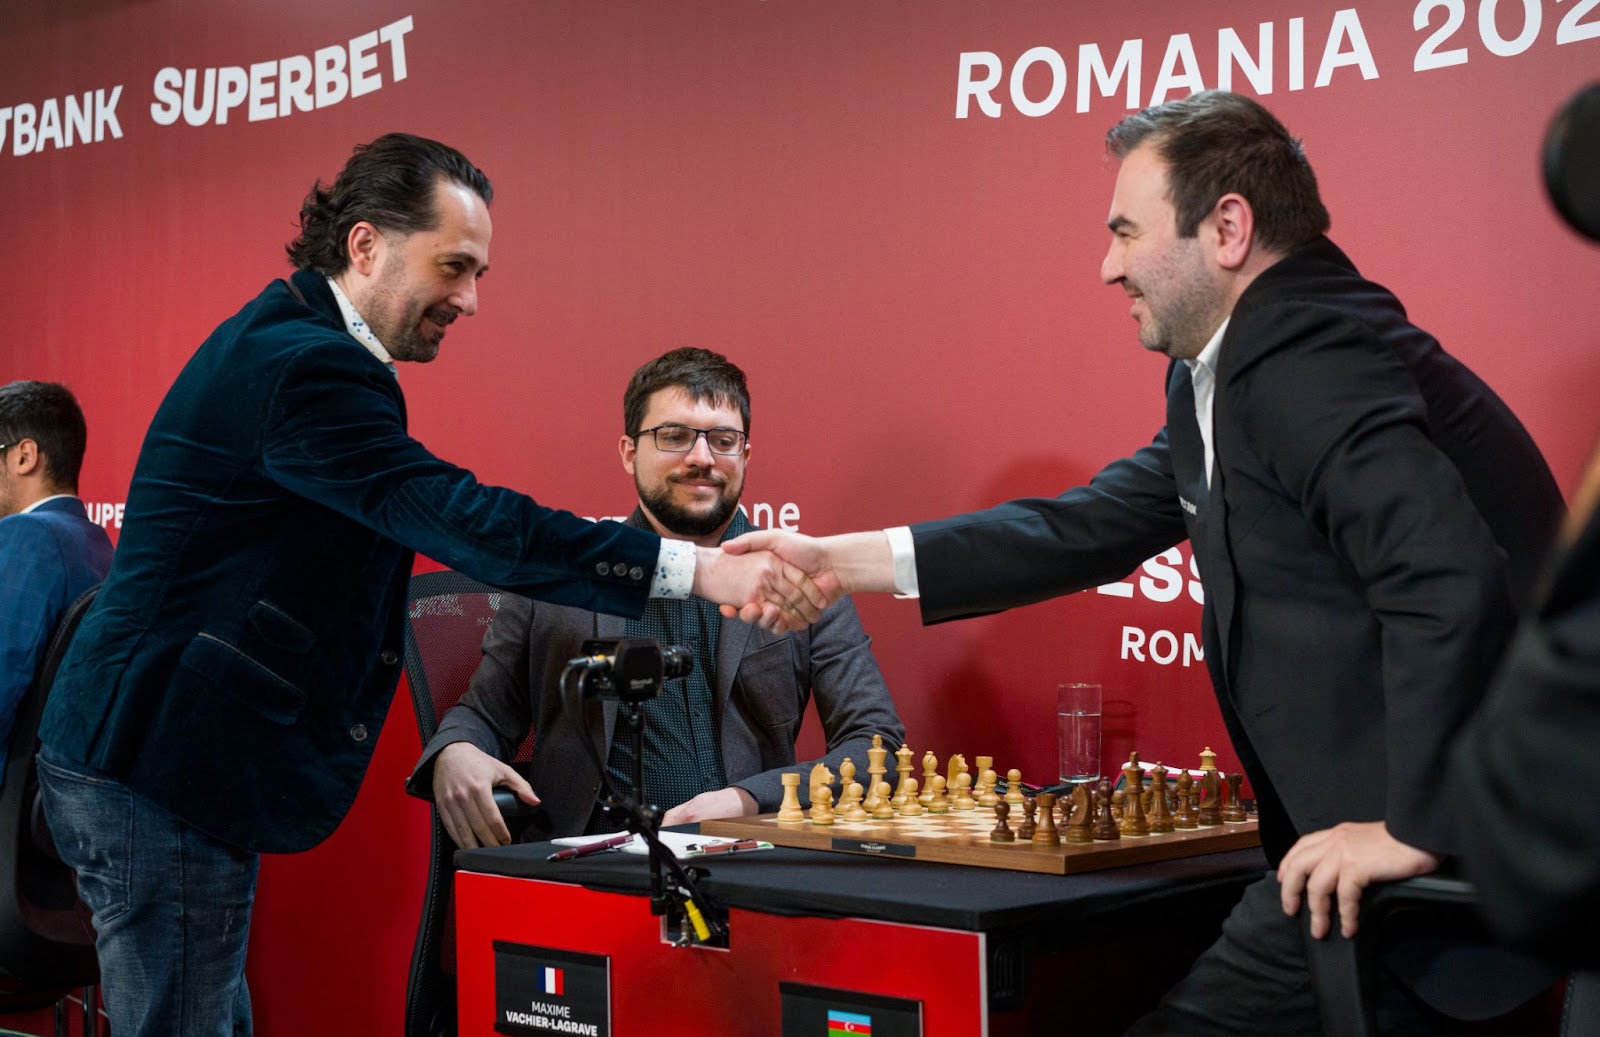 Superbet Chess Classic România: Richard Rapport